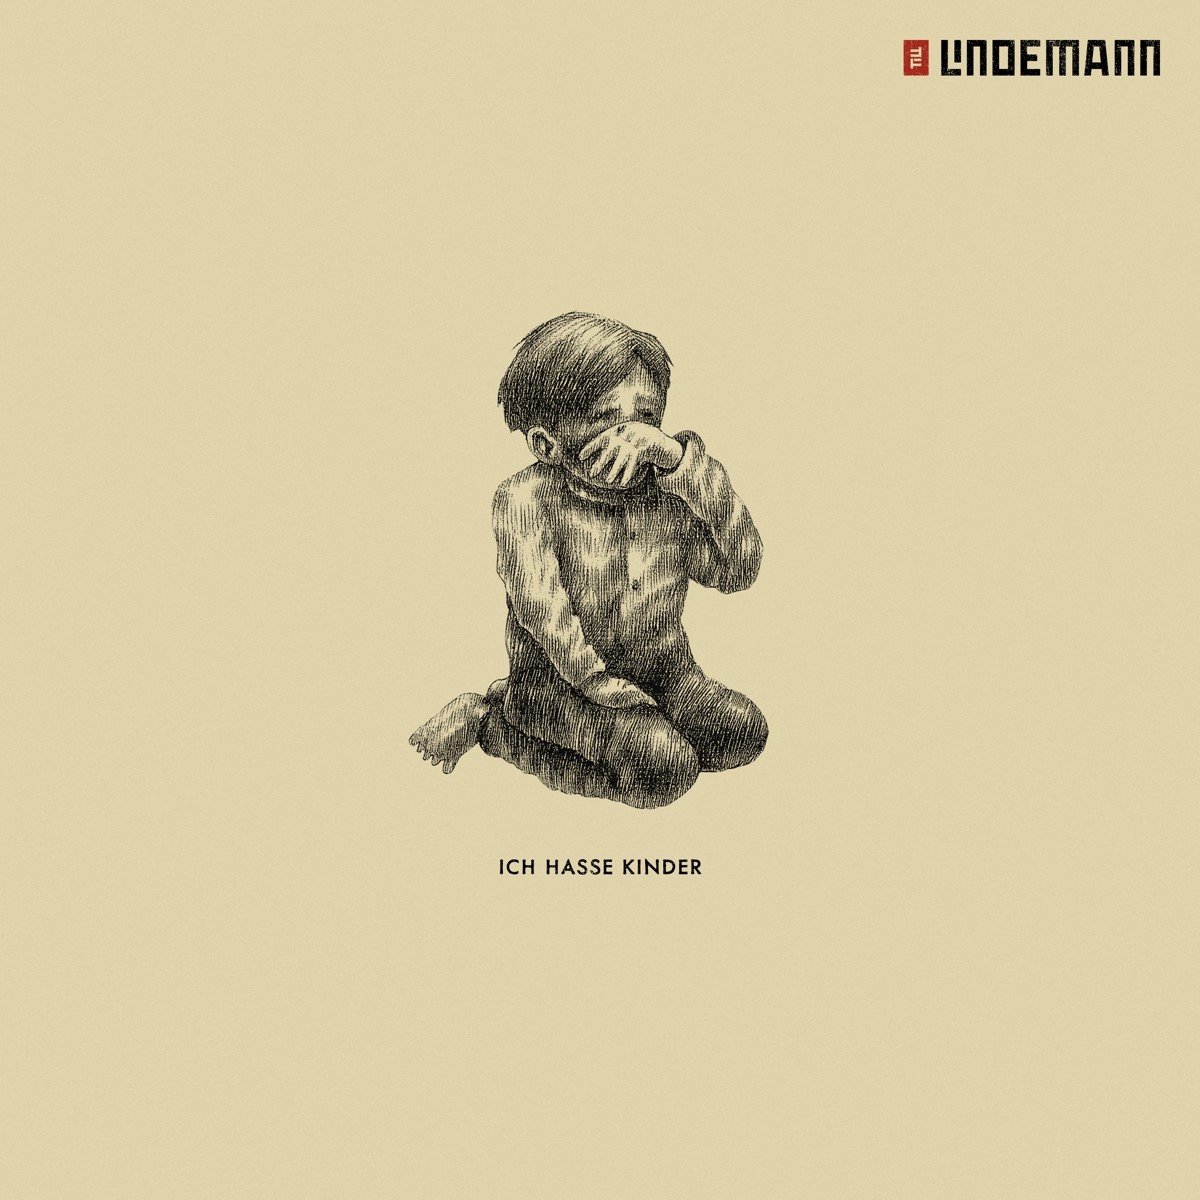 Ich Hasse Kinder (CD Single) (Limited Edition) - Till Lindemann